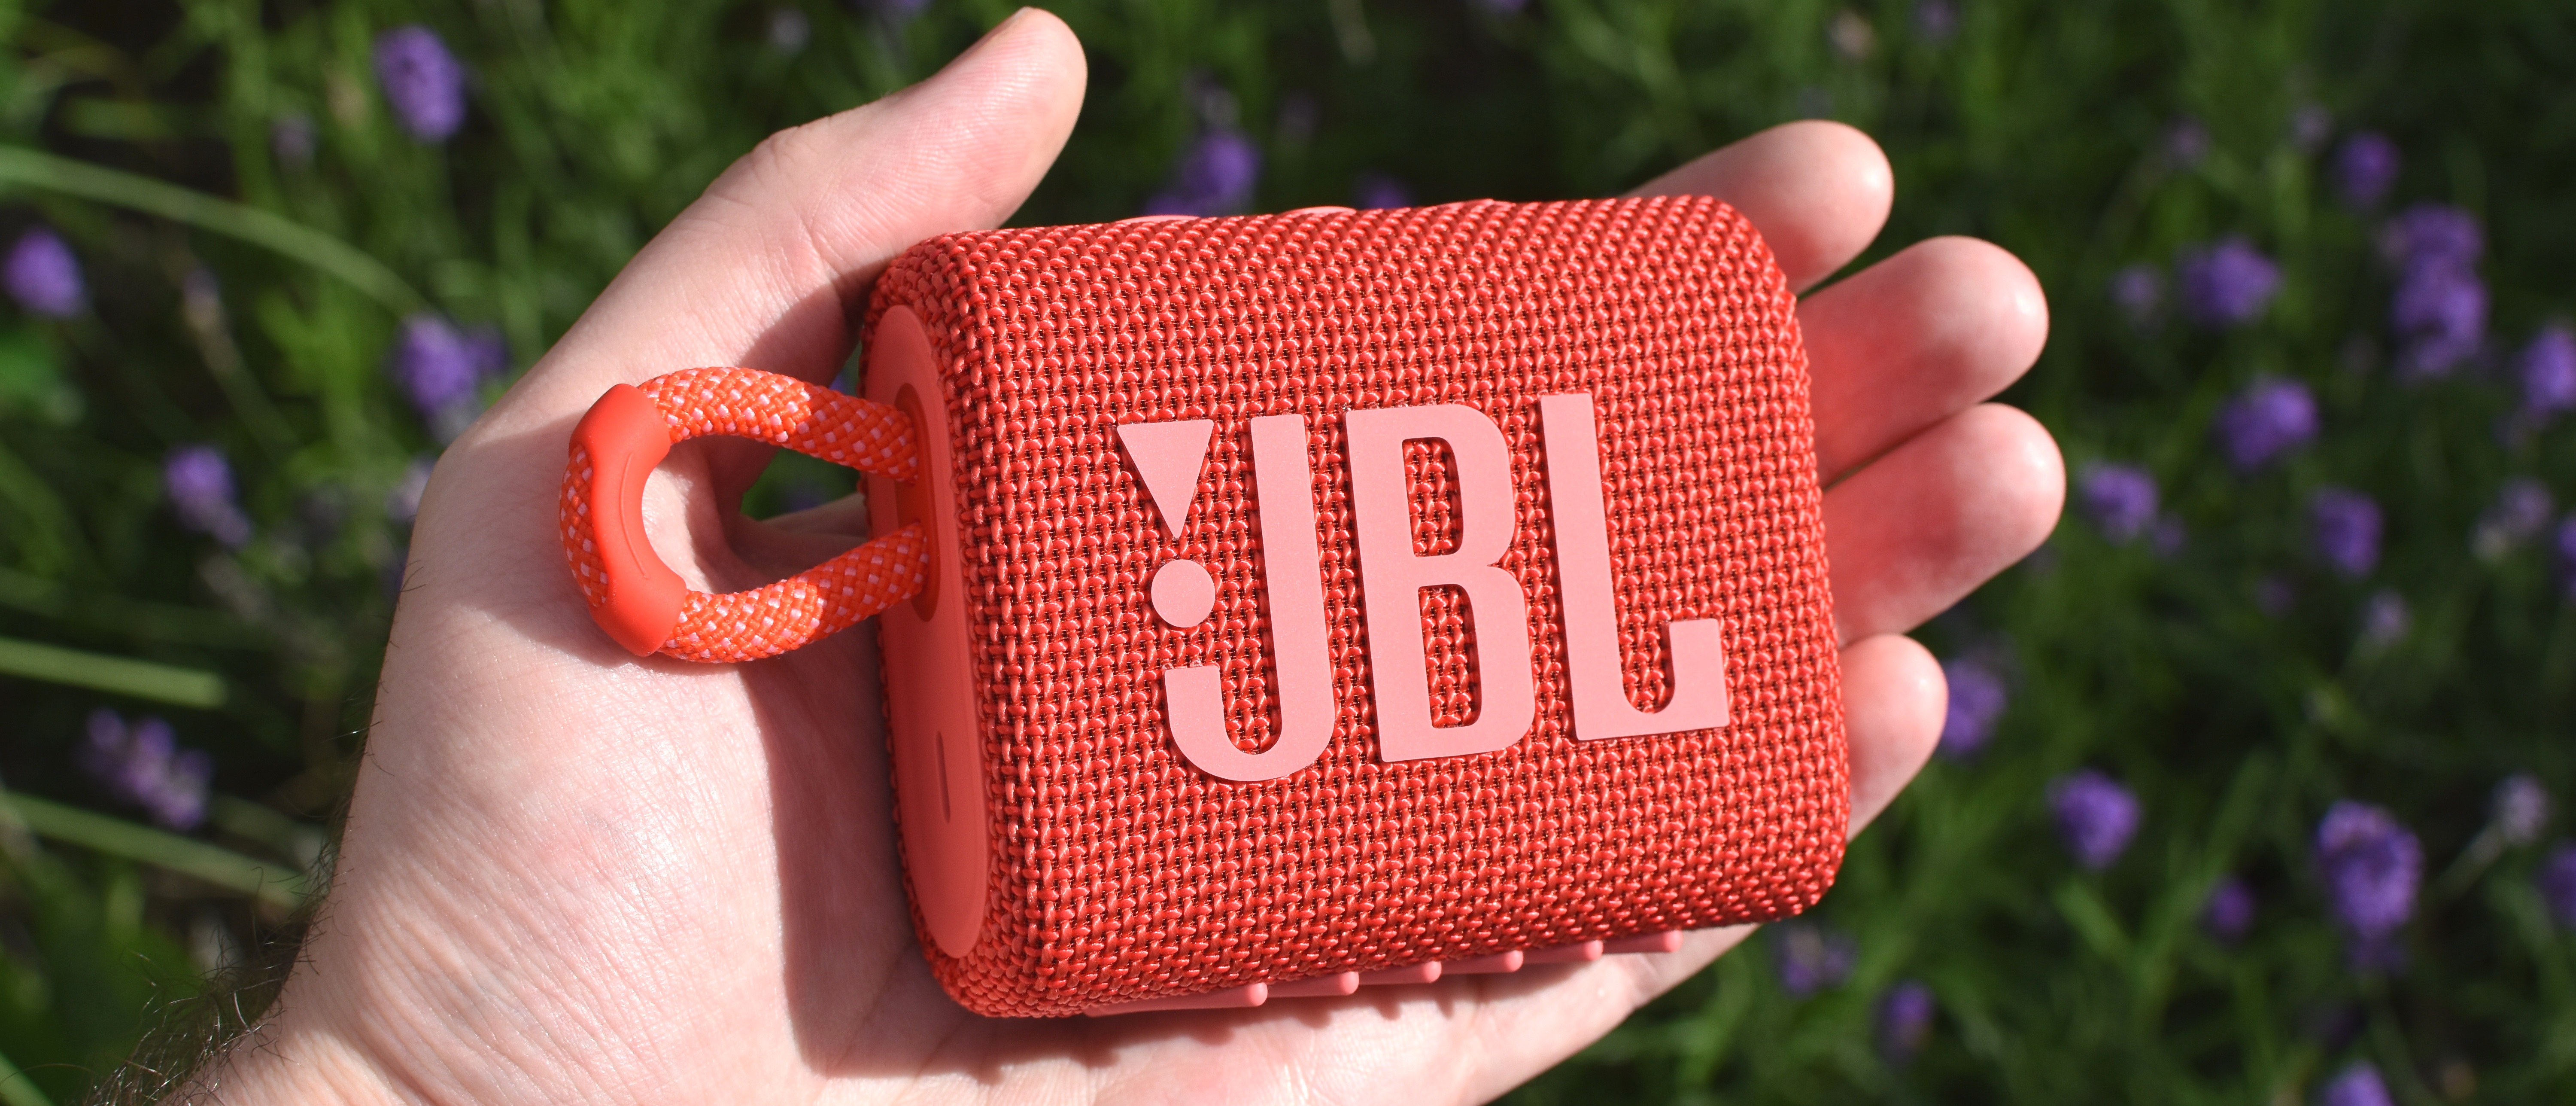 JBL 3 review: A punchy, pocket-sized waterproof speaker | Tom's Guide